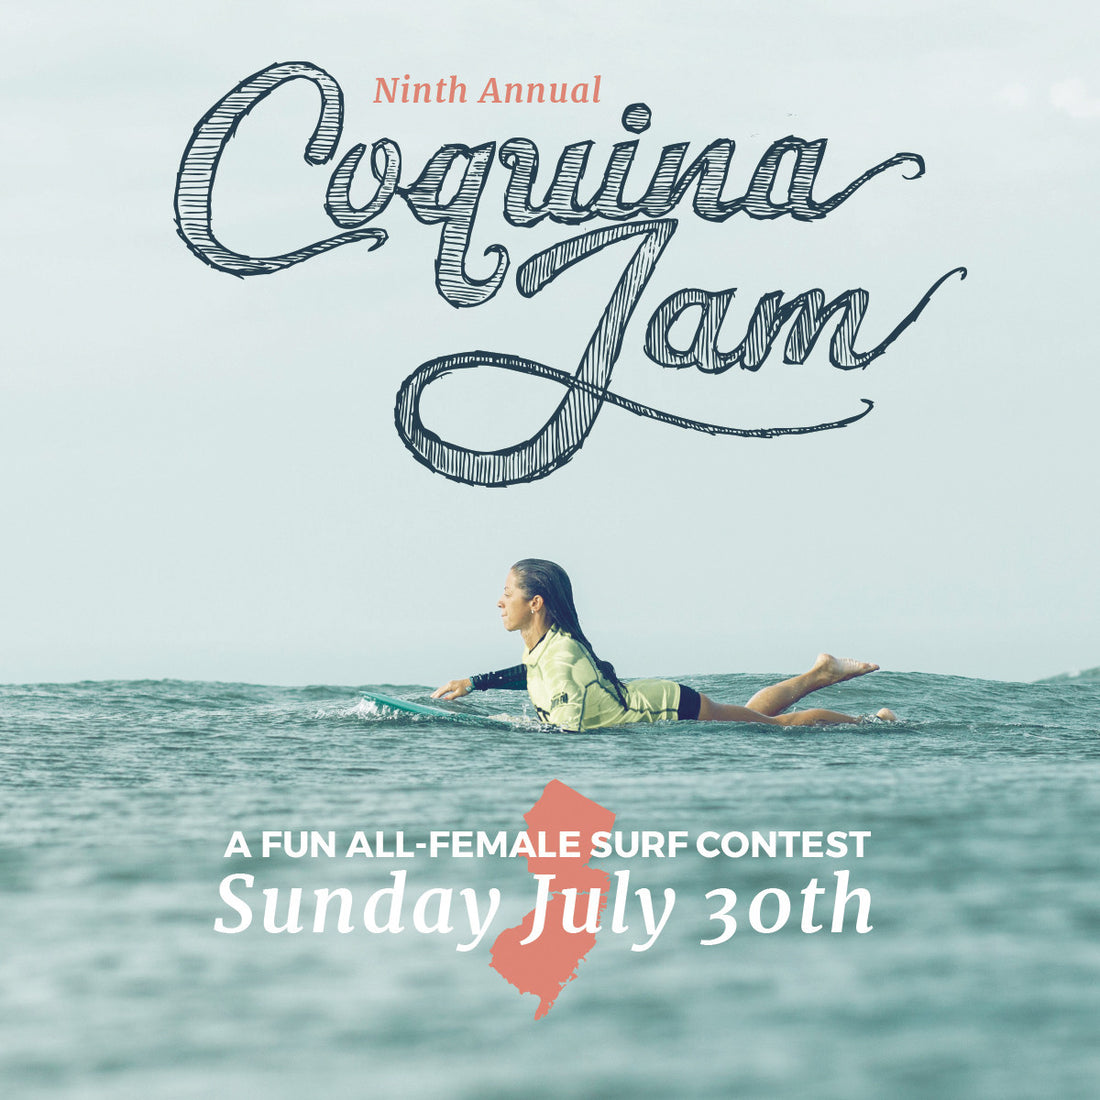 9th Annual Coquina Jam